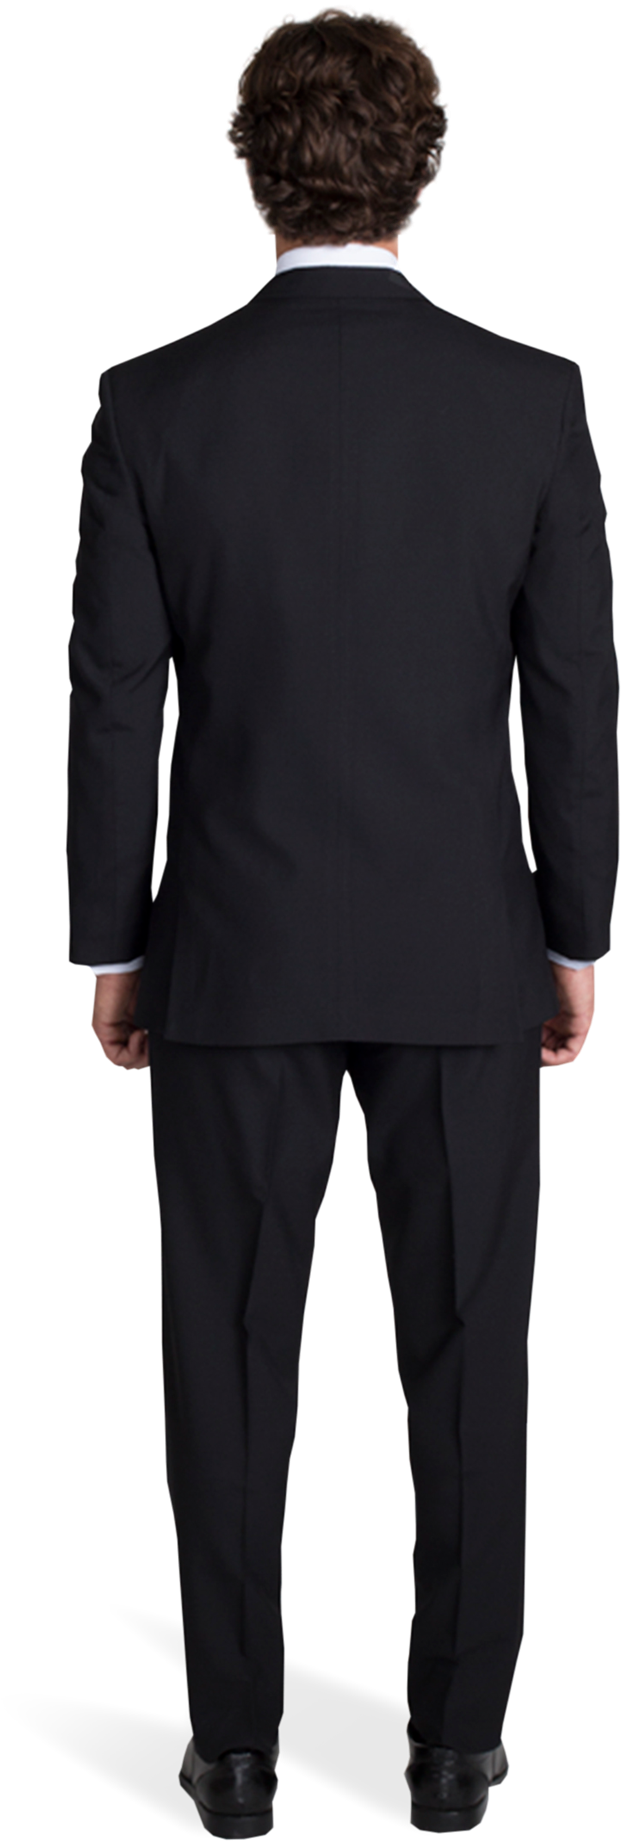 Download Black Notch Lapel Suit With Silver Tie - Suit And Tie Back ...